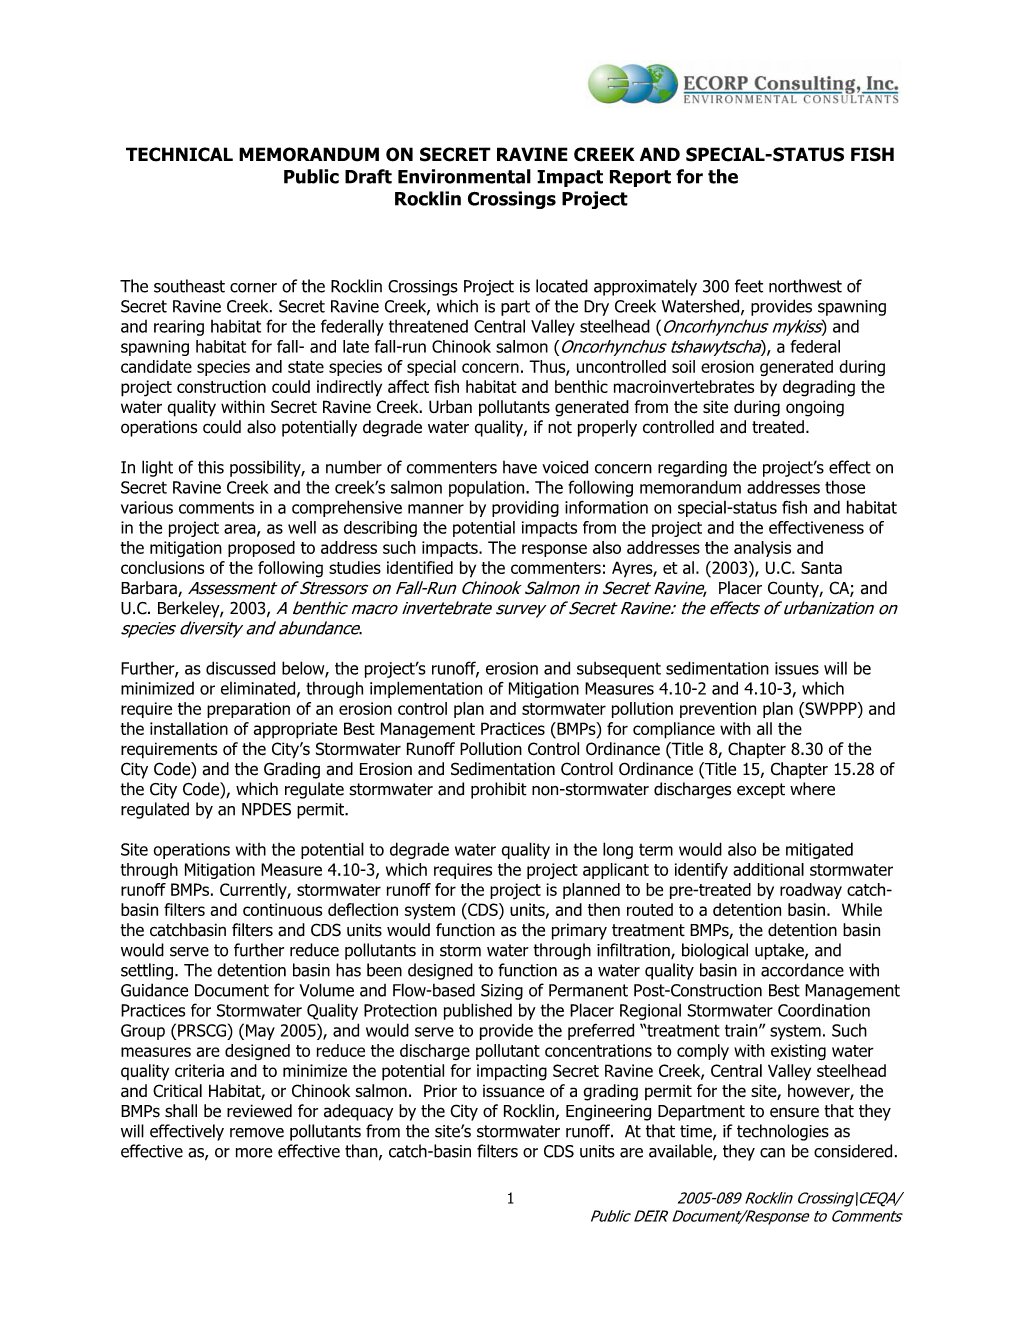 TECHNICAL MEMORANDUM on SECRET RAVINE CREEK and SPECIAL-STATUS FISH Public Draft Environmental Impact Report for the Rocklin Crossings Project